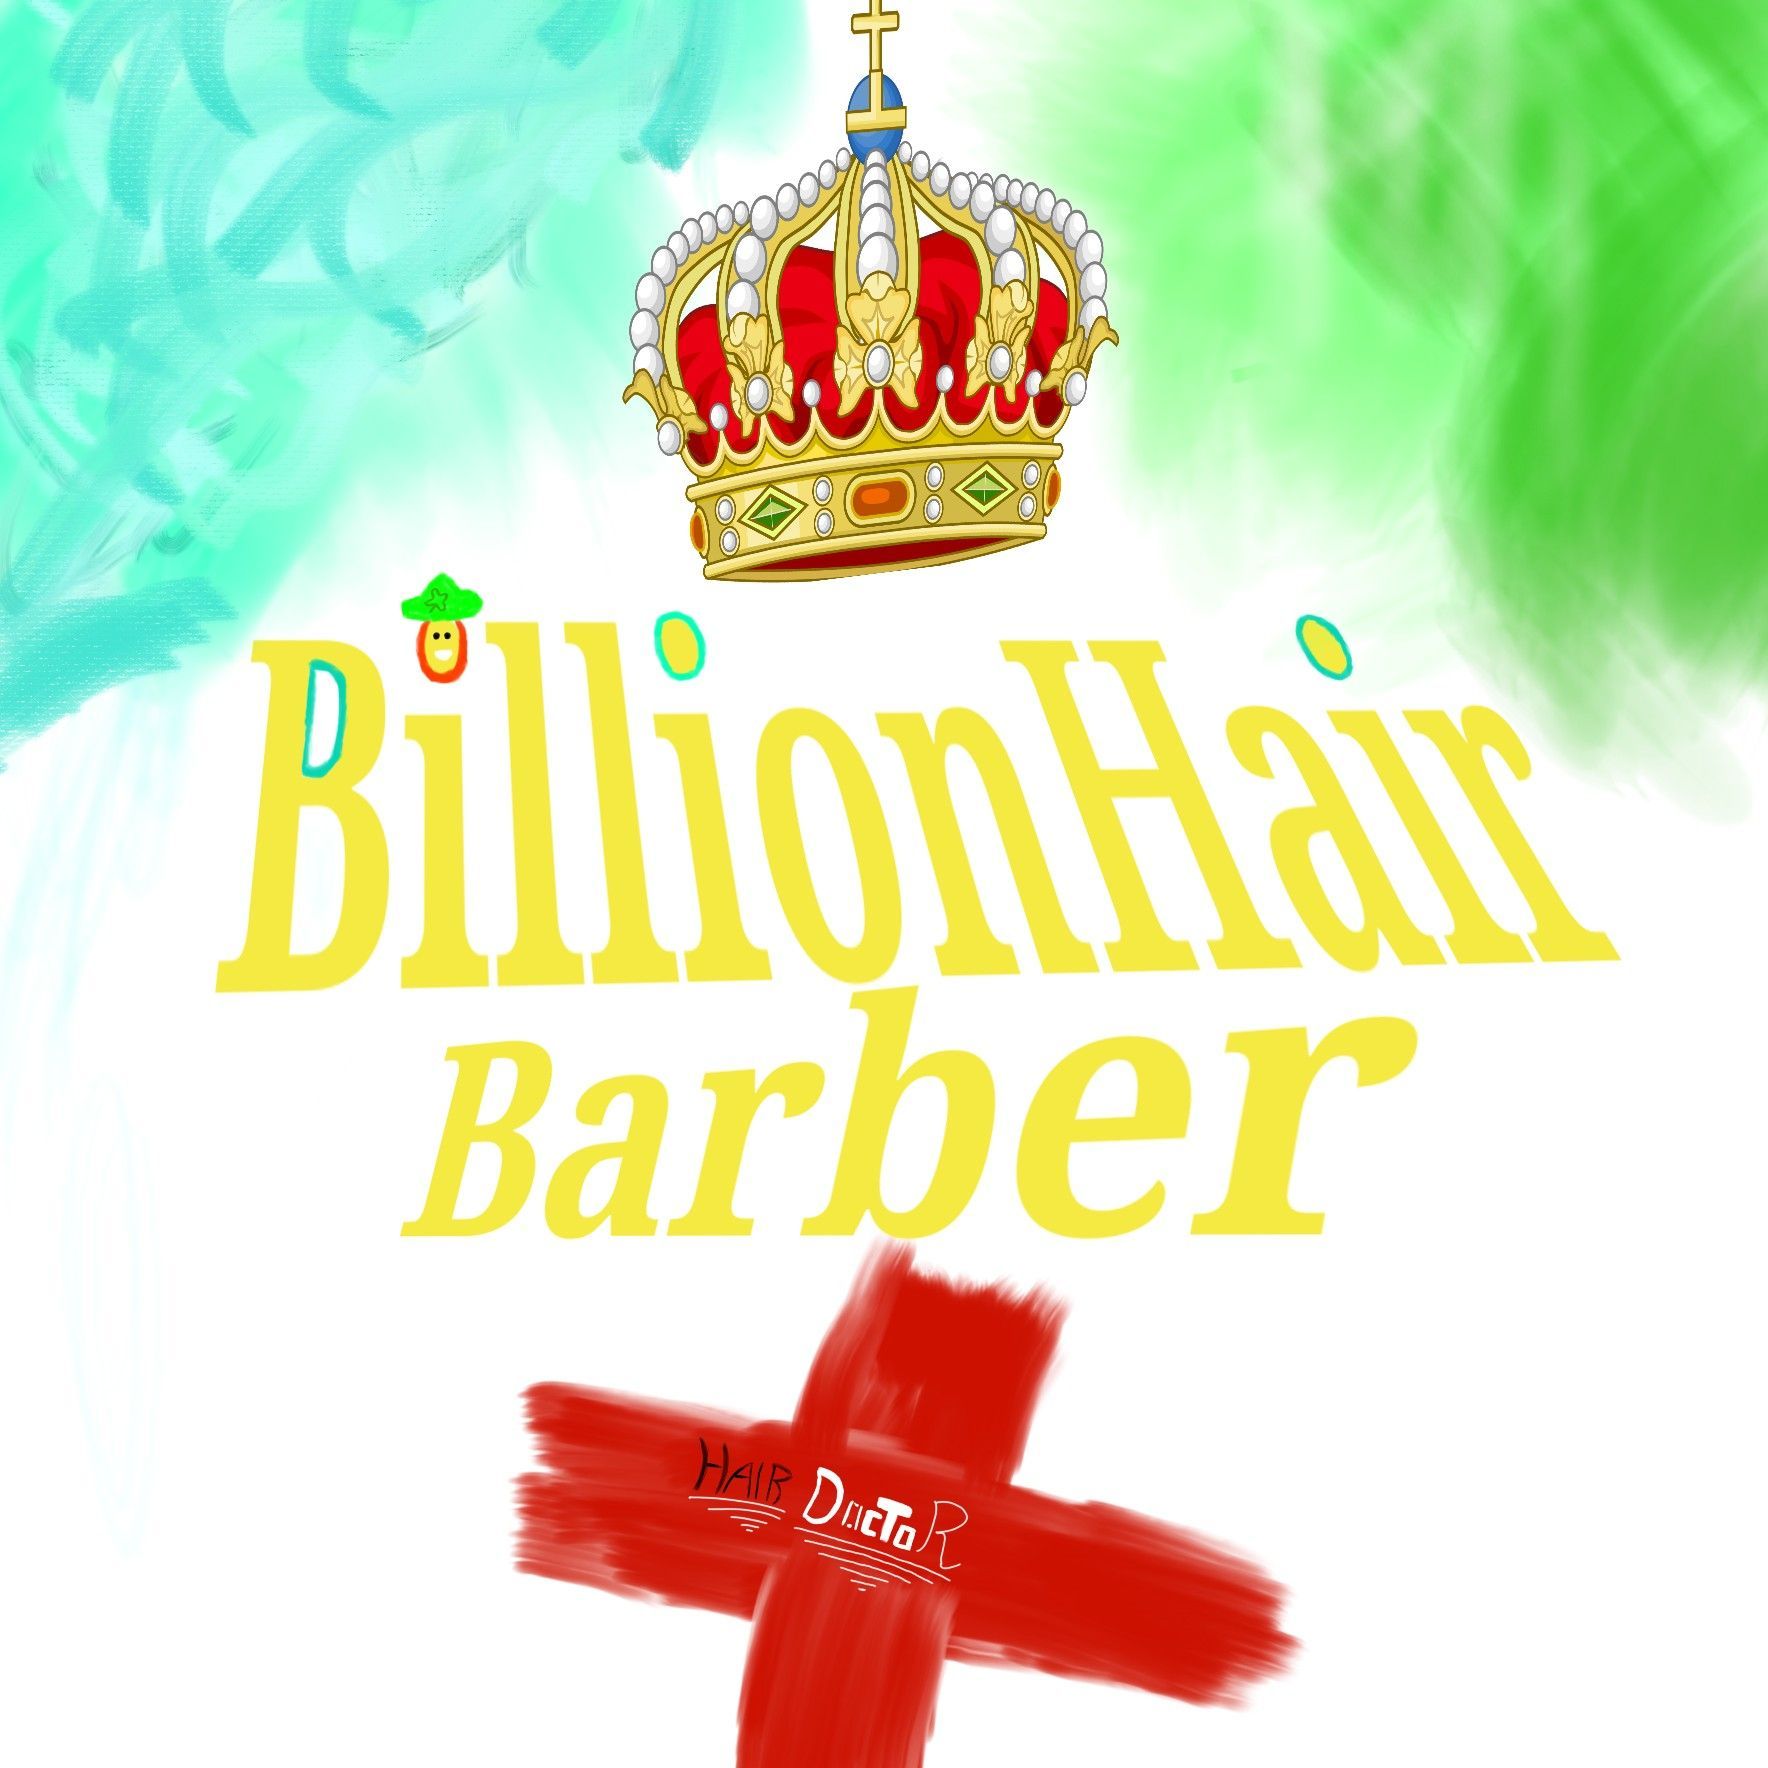 Billionhair Barber, 13 Stainforth Street, NG19 9AP, Mansfield